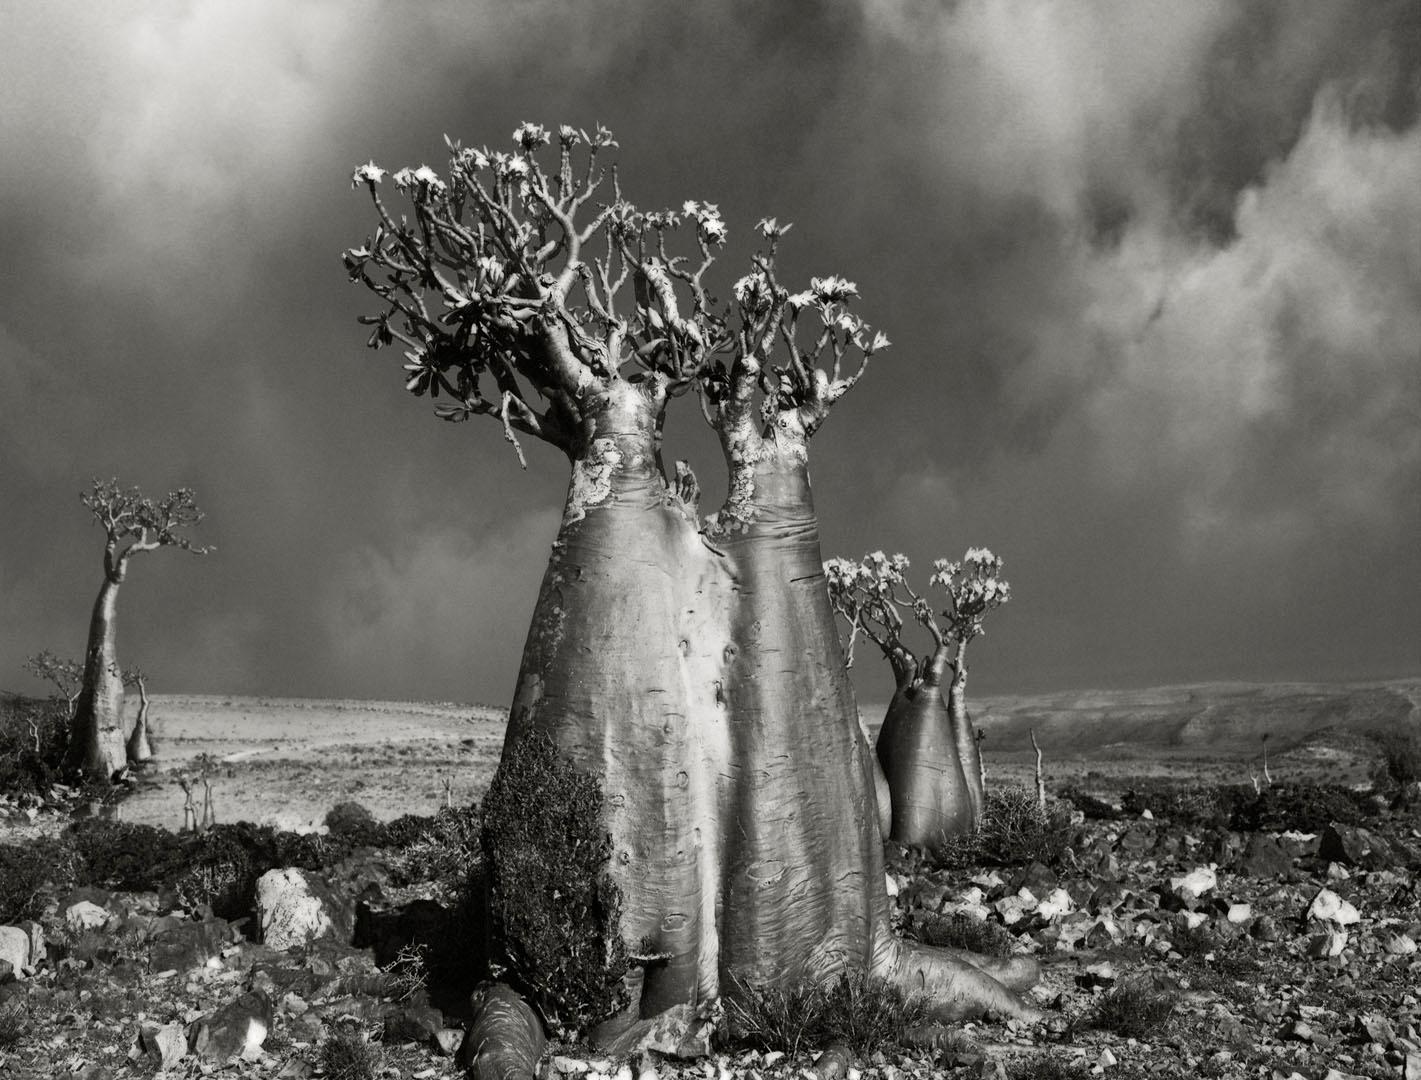 Beth Moon Landscape Photograph - Desert Rose (Wadi fa Lang)